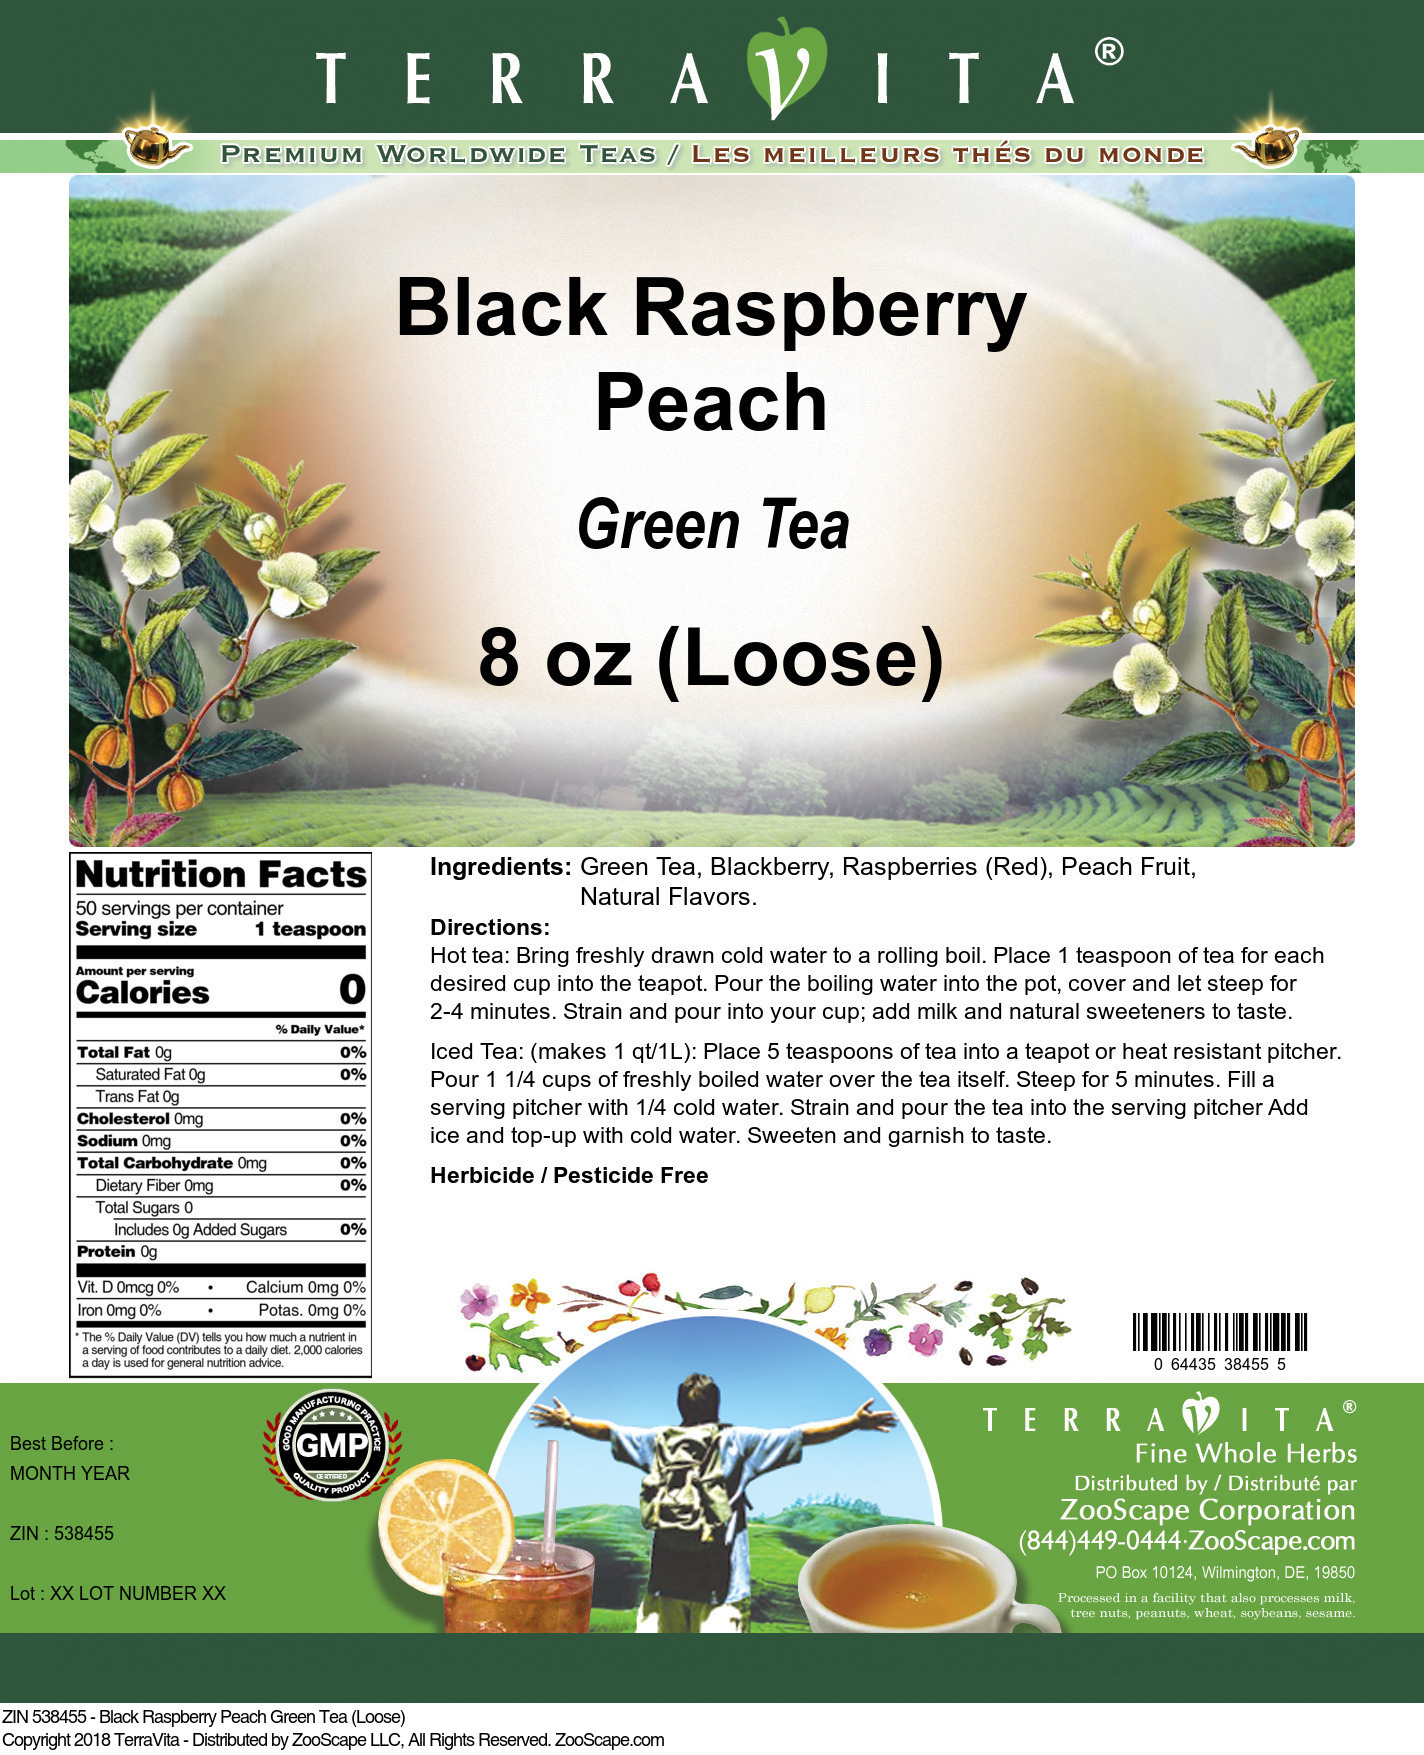 Black Raspberry Peach Green Tea (Loose) - Label